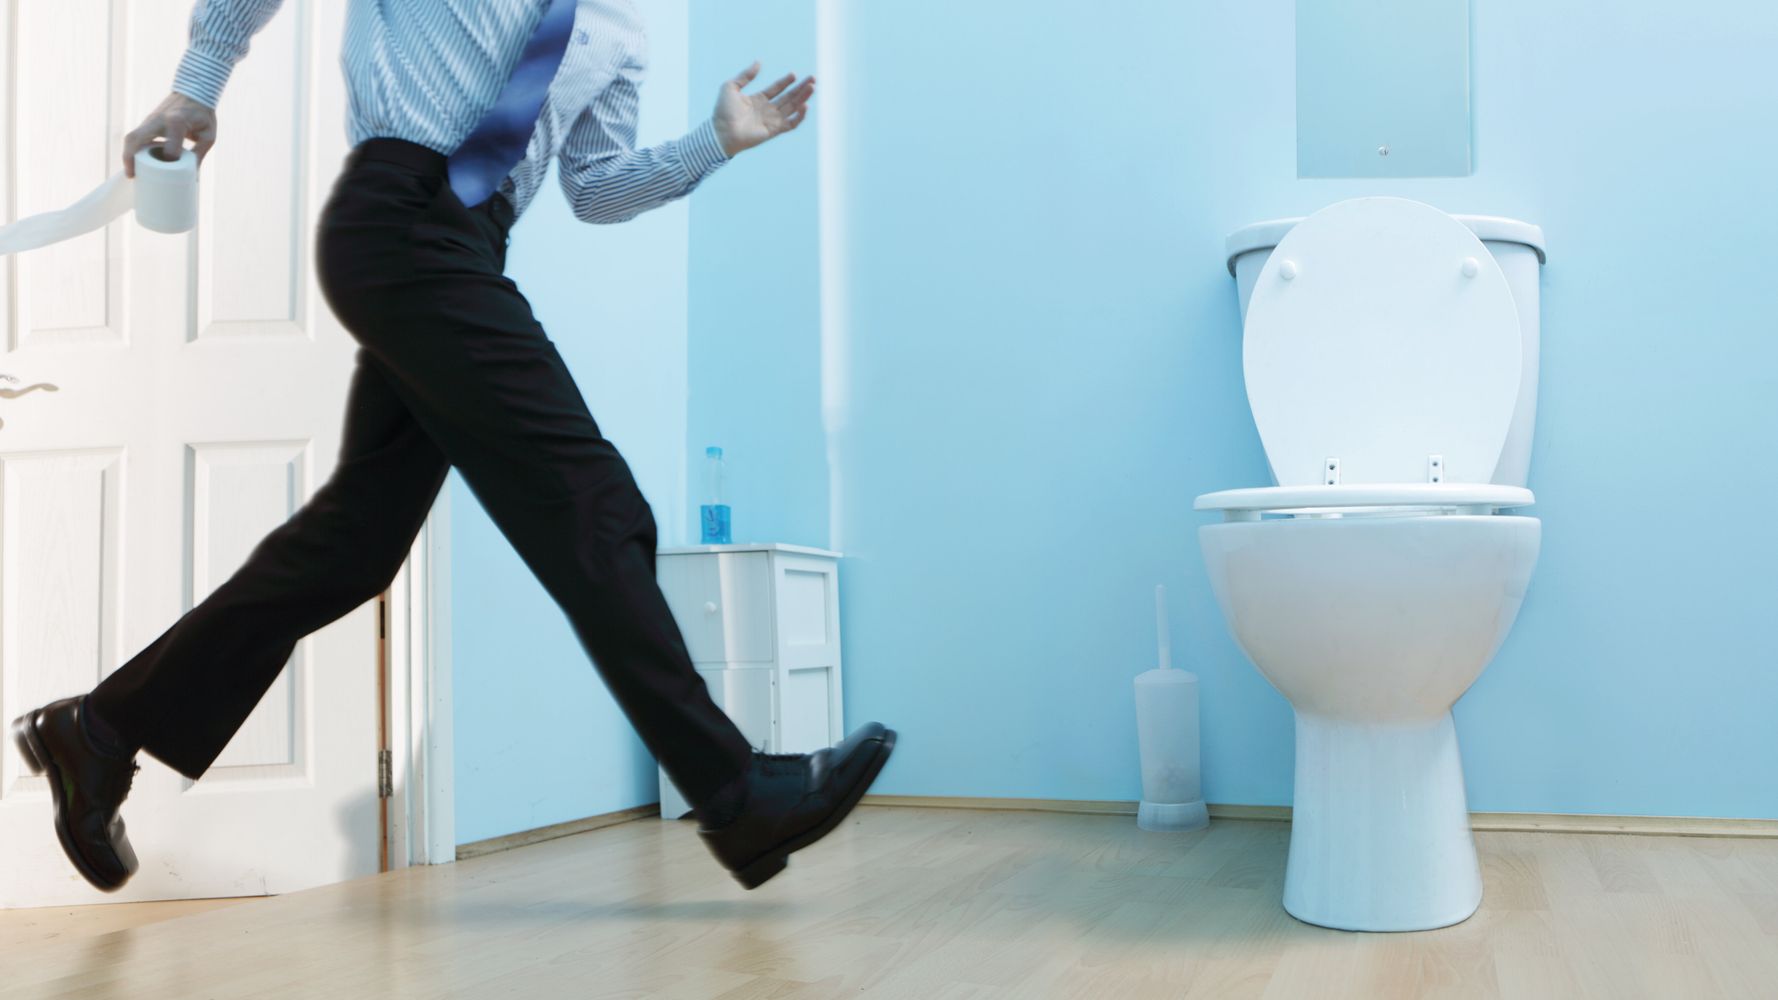 Man Boy Busting For A Pee Restroom Bathroom Toilet Door Joke Sign